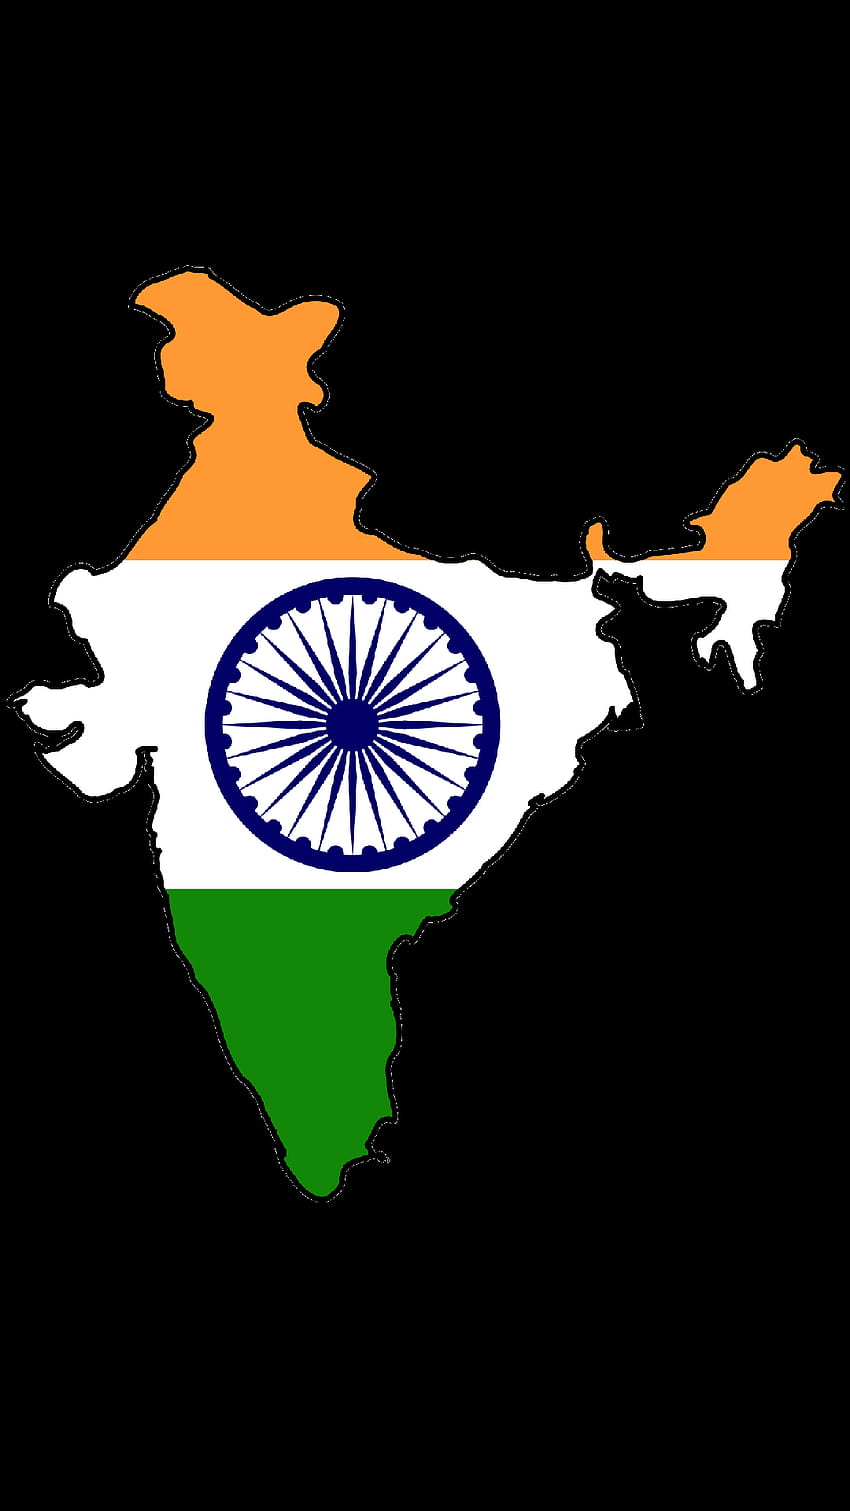 Bandera de India para teléfono móvil 04 de 17 – Mapa y bandera de India, mapa de India para móvil fondo de pantalla del teléfono